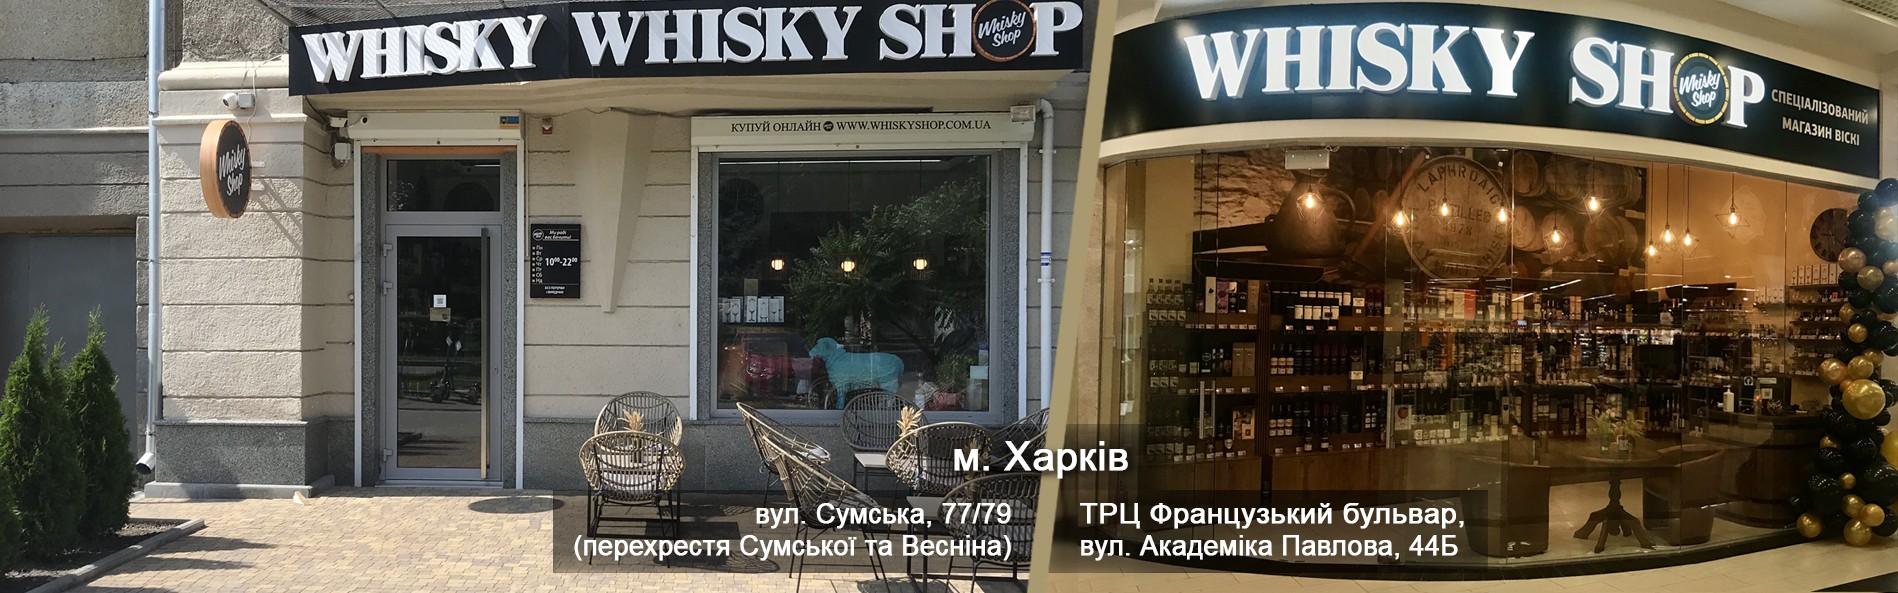 Whisky Shop & Whisky Shop